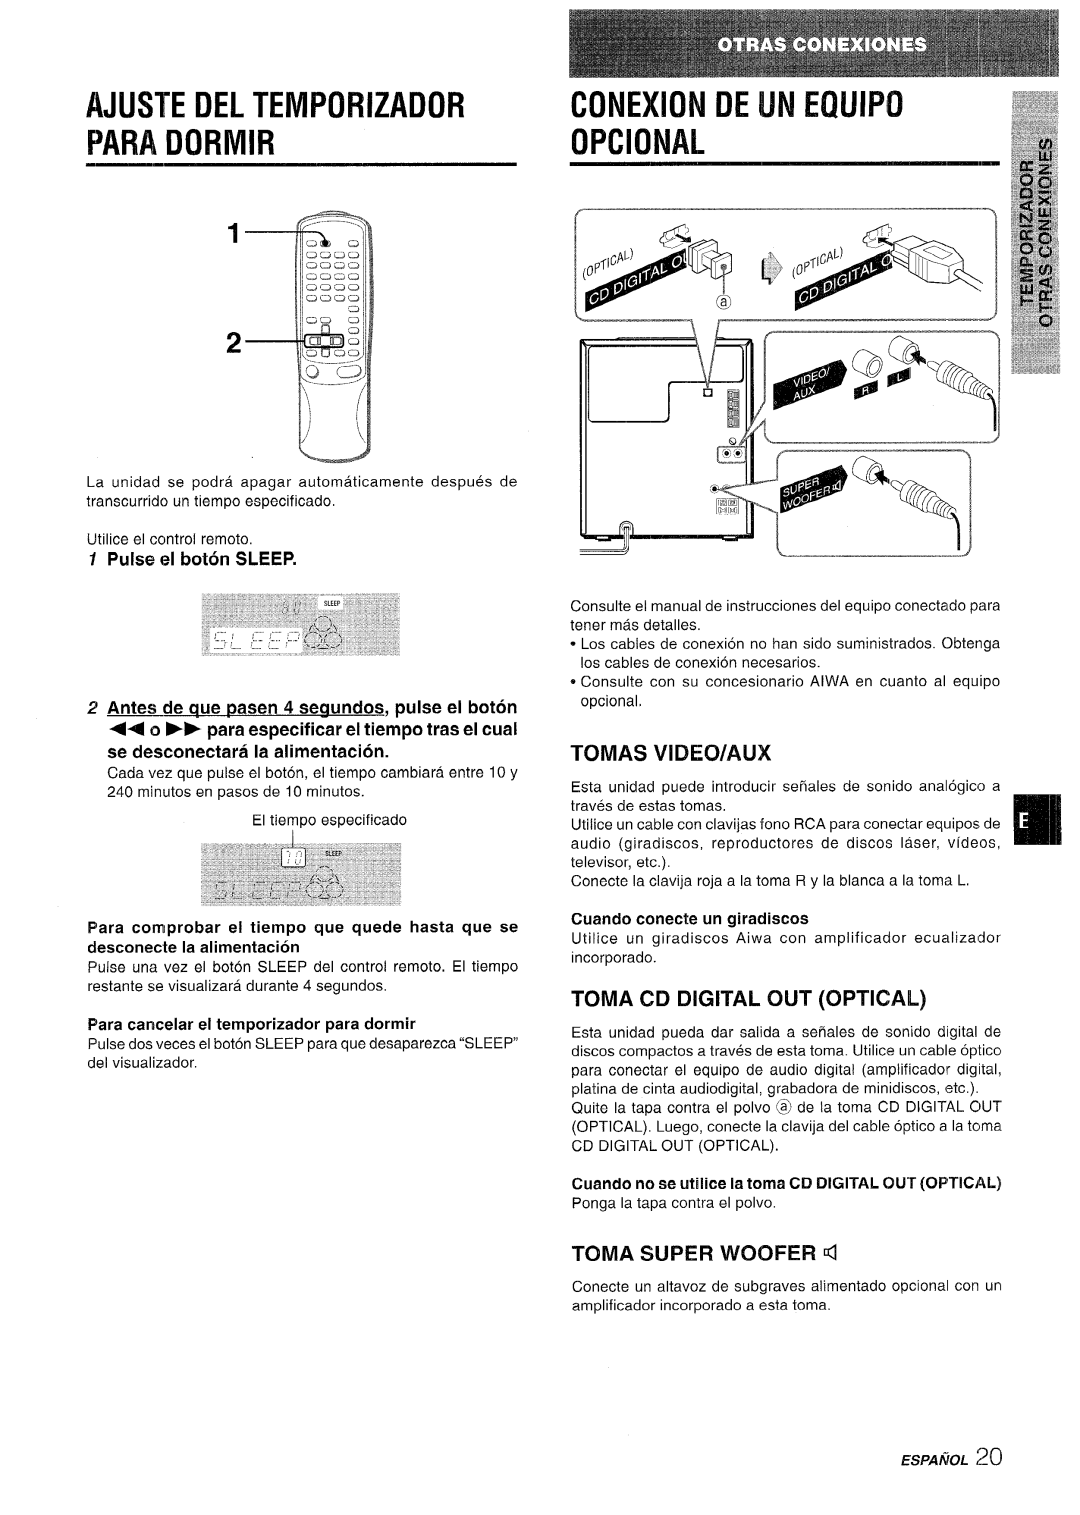 Aiwa CX-NV8000 manual Ajuste Del Tempofuzador Para Dormir, Tomas Vidhyaux, Toma Cd Digital Out Optical, TOMA SUPER WOOFER d 